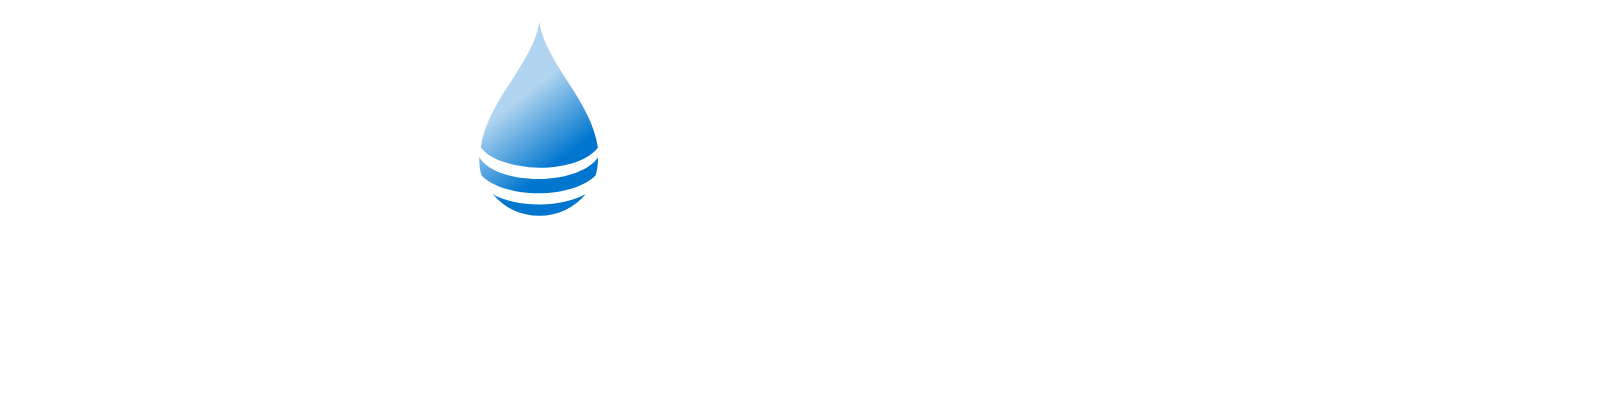 PROCEPT BioRobotics logo grand pour les fonds sombres (PNG transparent)